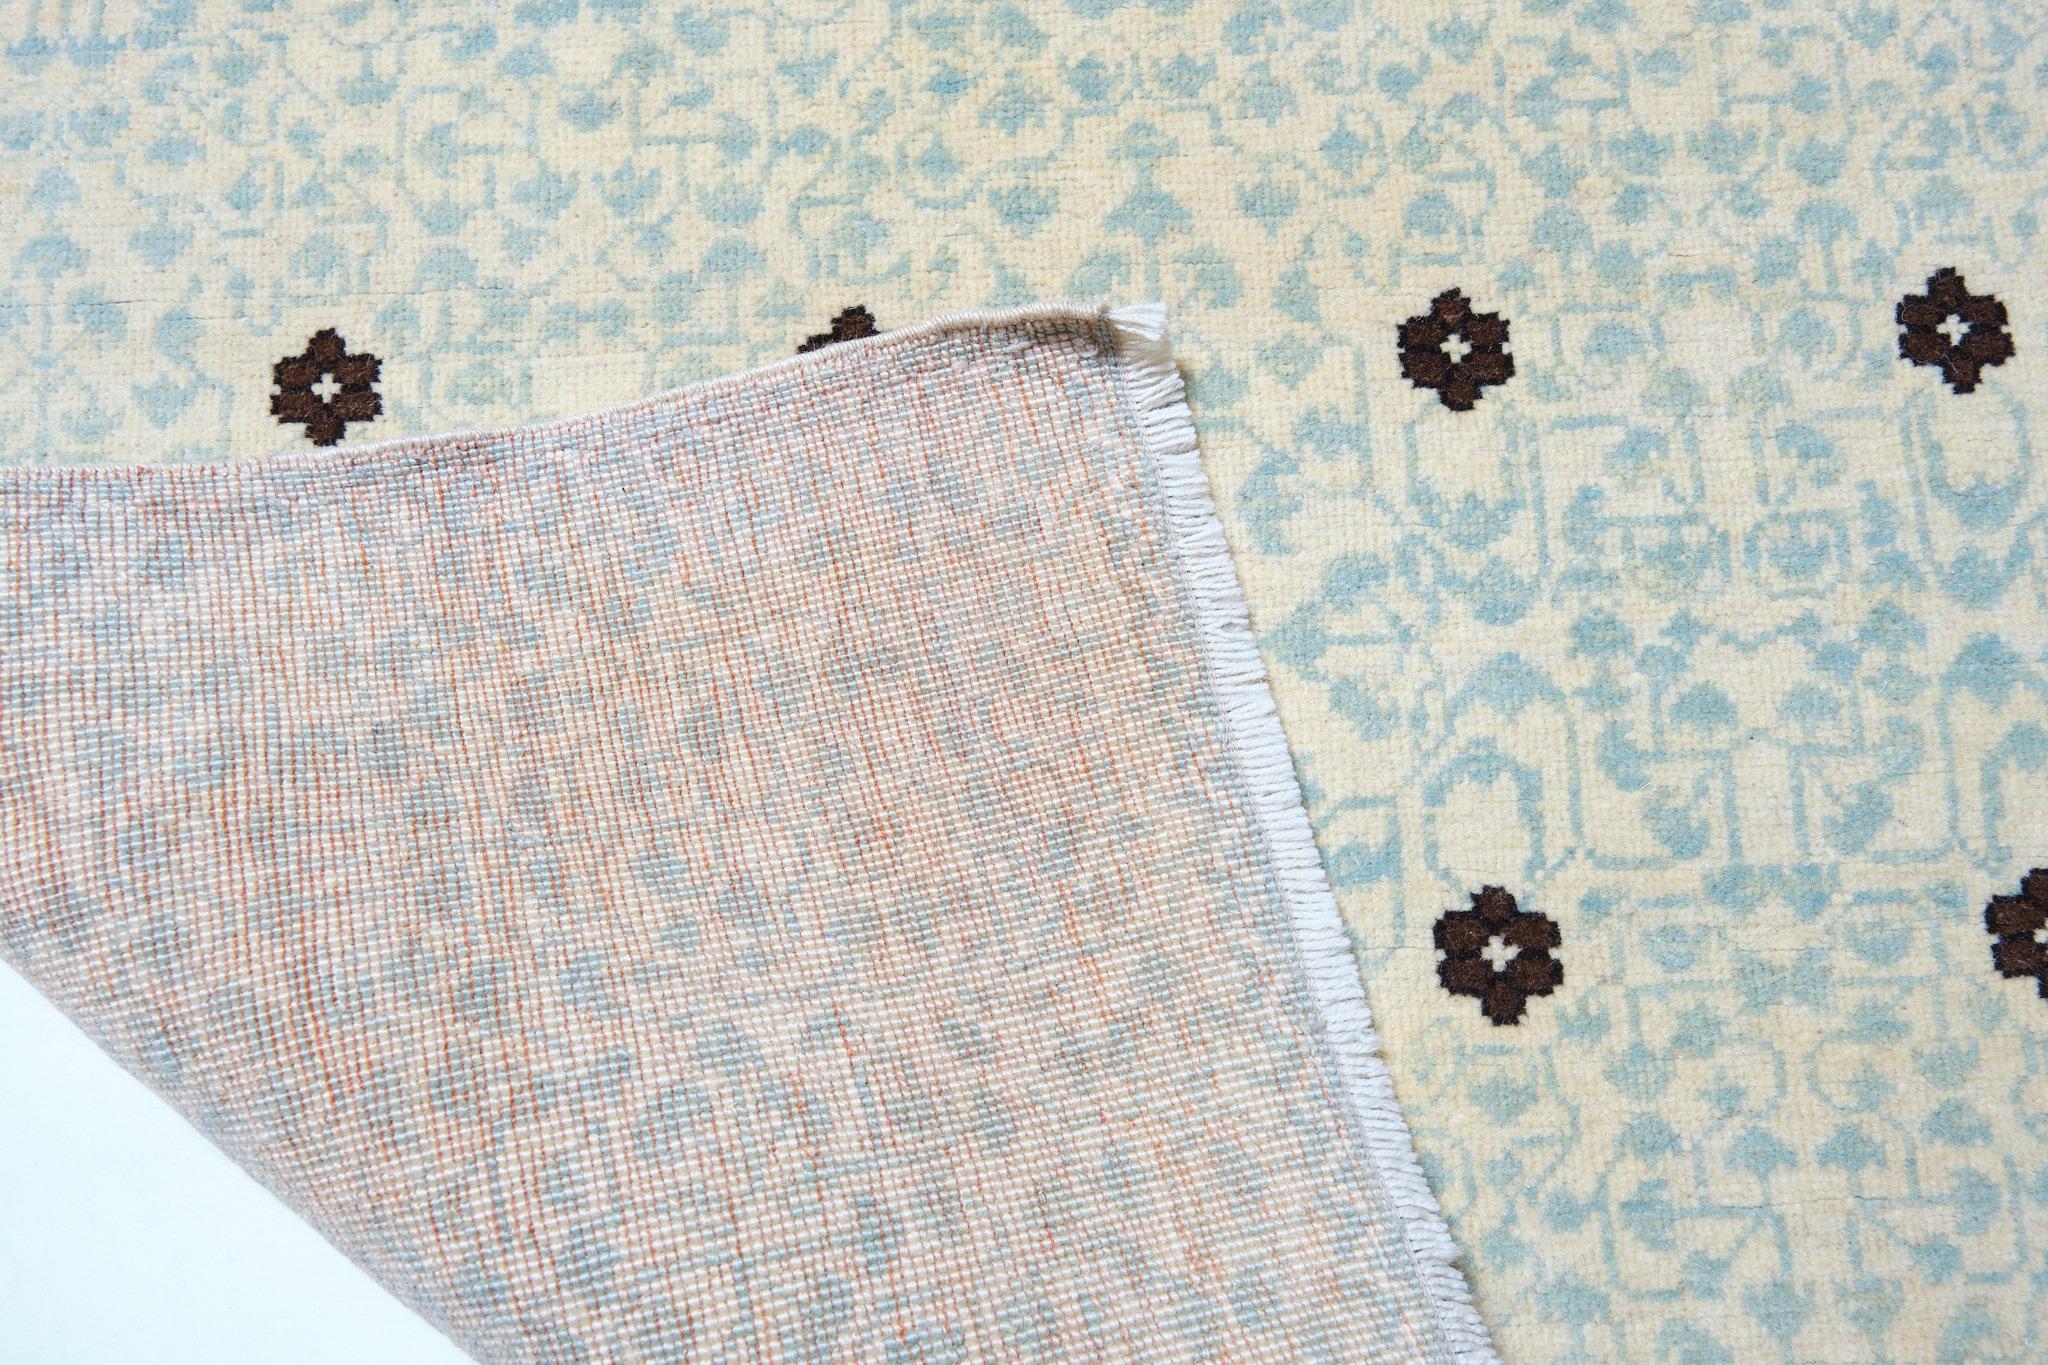 Turkish Ararat Rugs Mamluk Wagireh Rug Leaf Lattice Design, Revival Carpet Natural Dyed For Sale